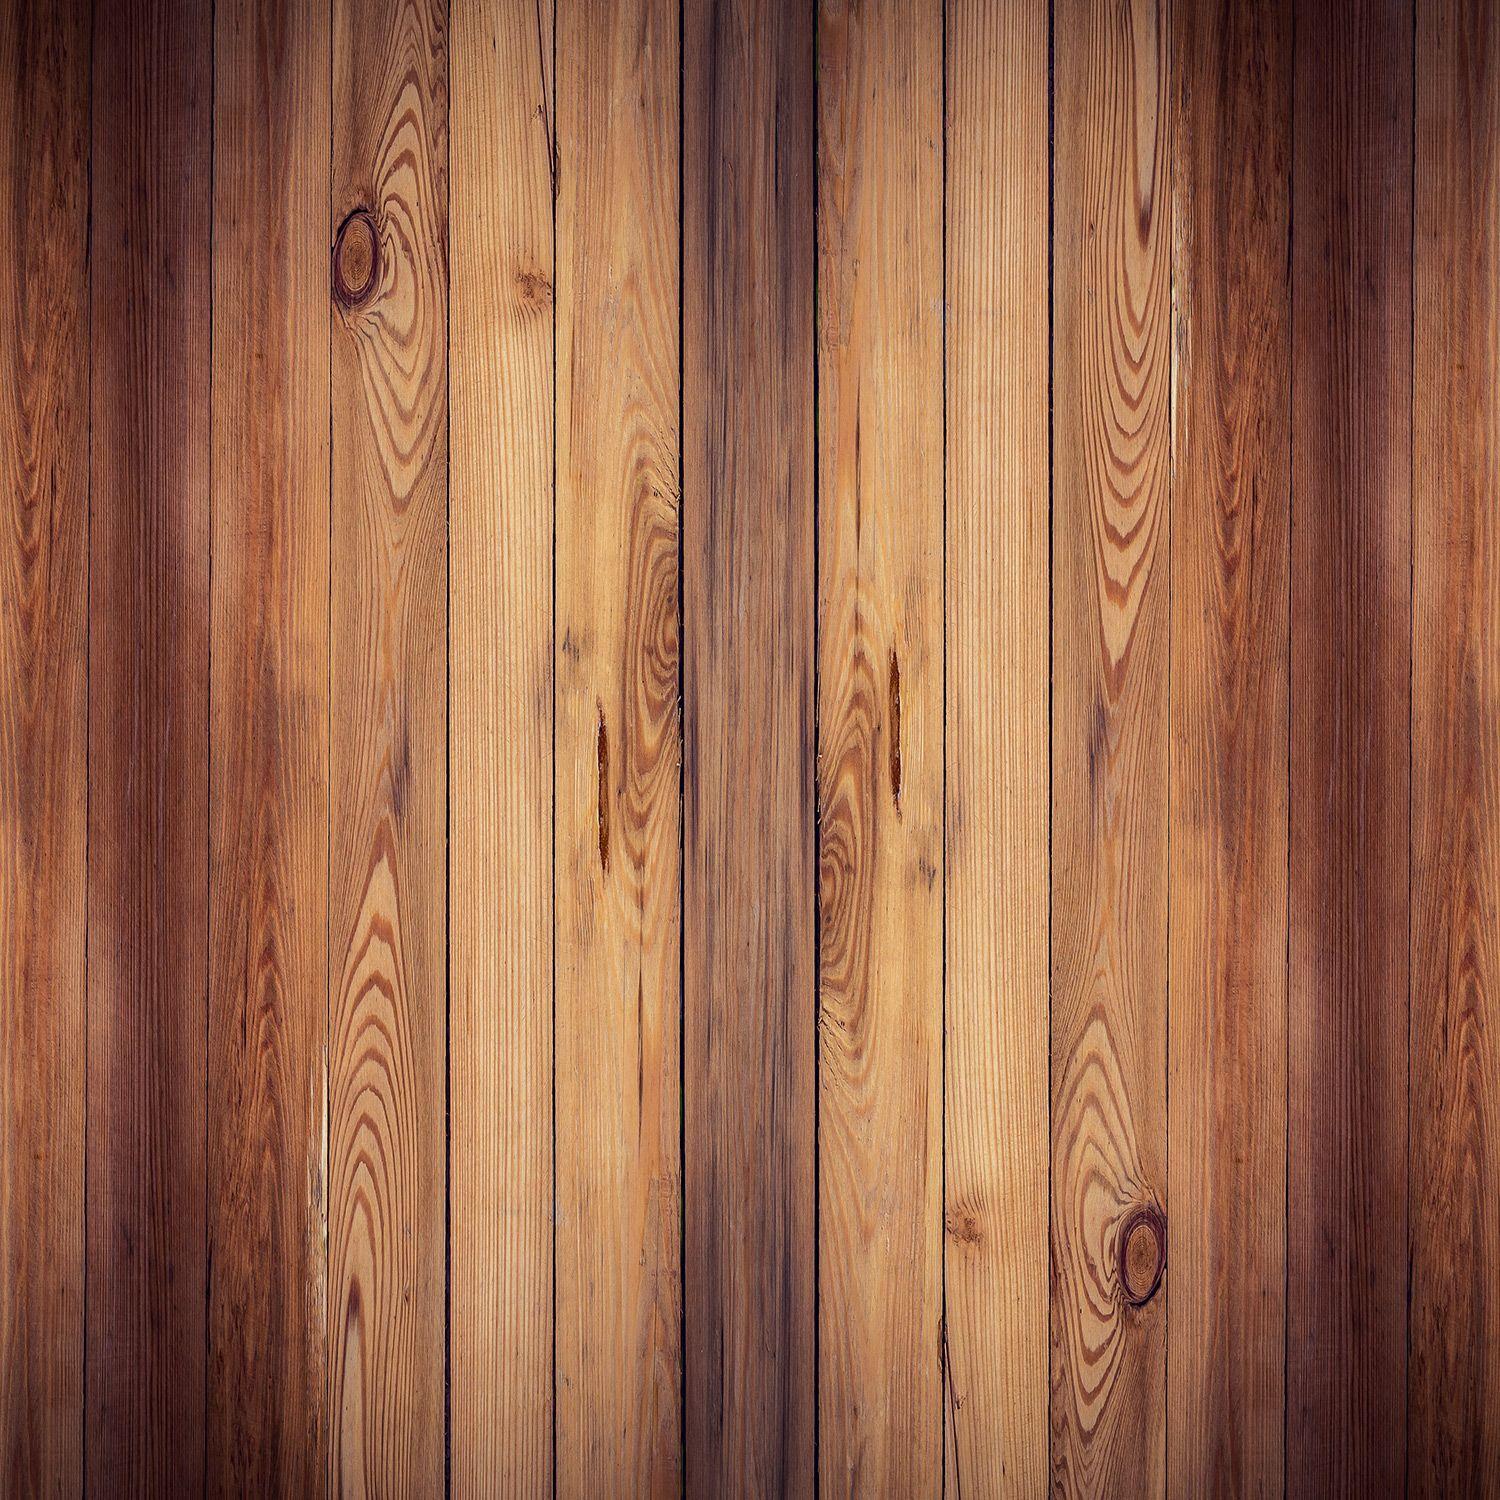 Vertical Wooden Planks Wallpaper